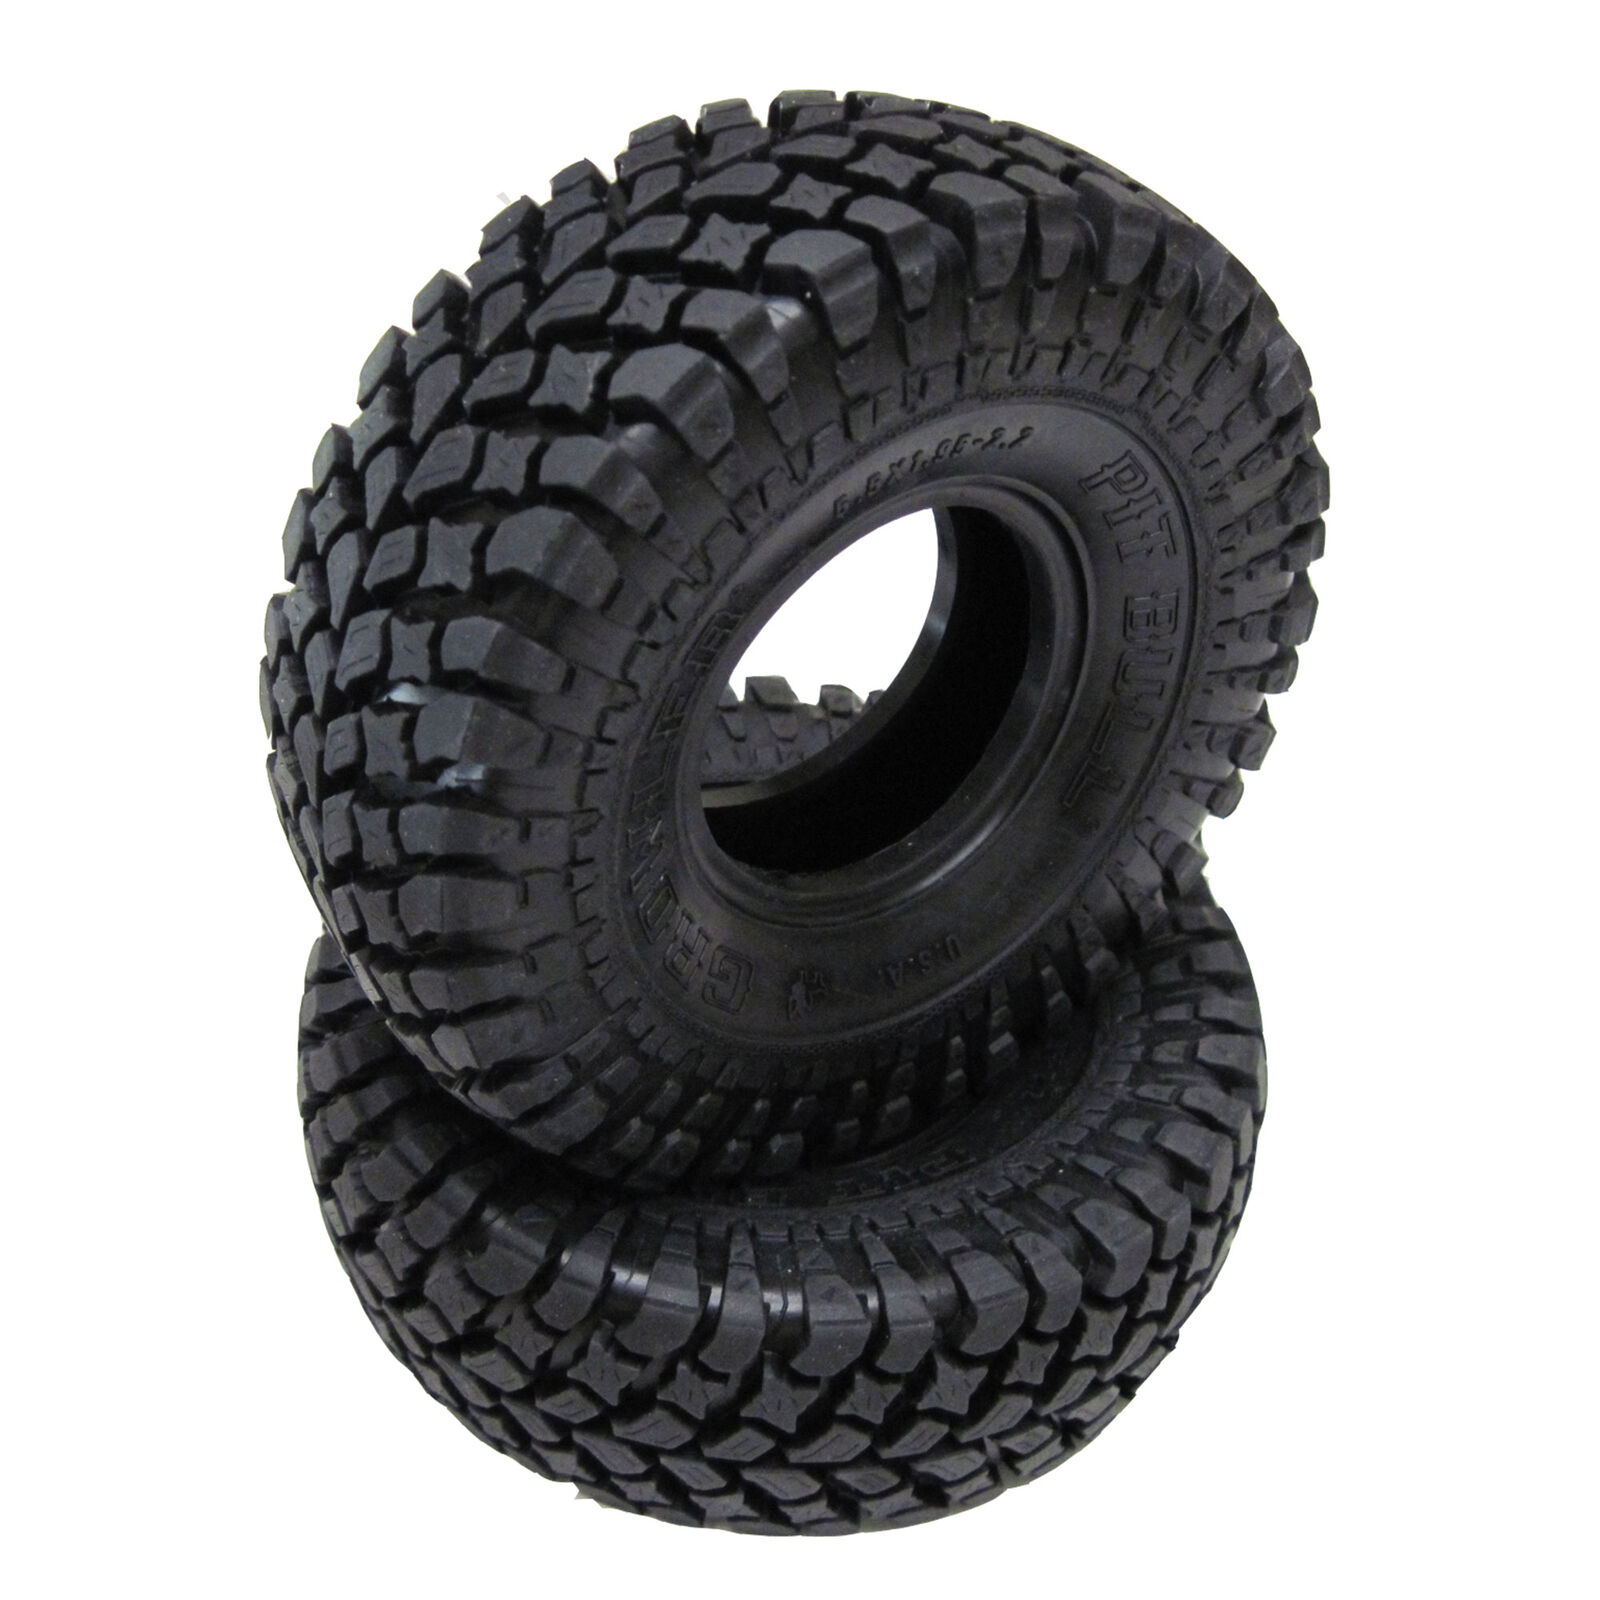 2.2 Growler AT/Extra Alien Kompound Crawler Tires (2) No Foam Inserts